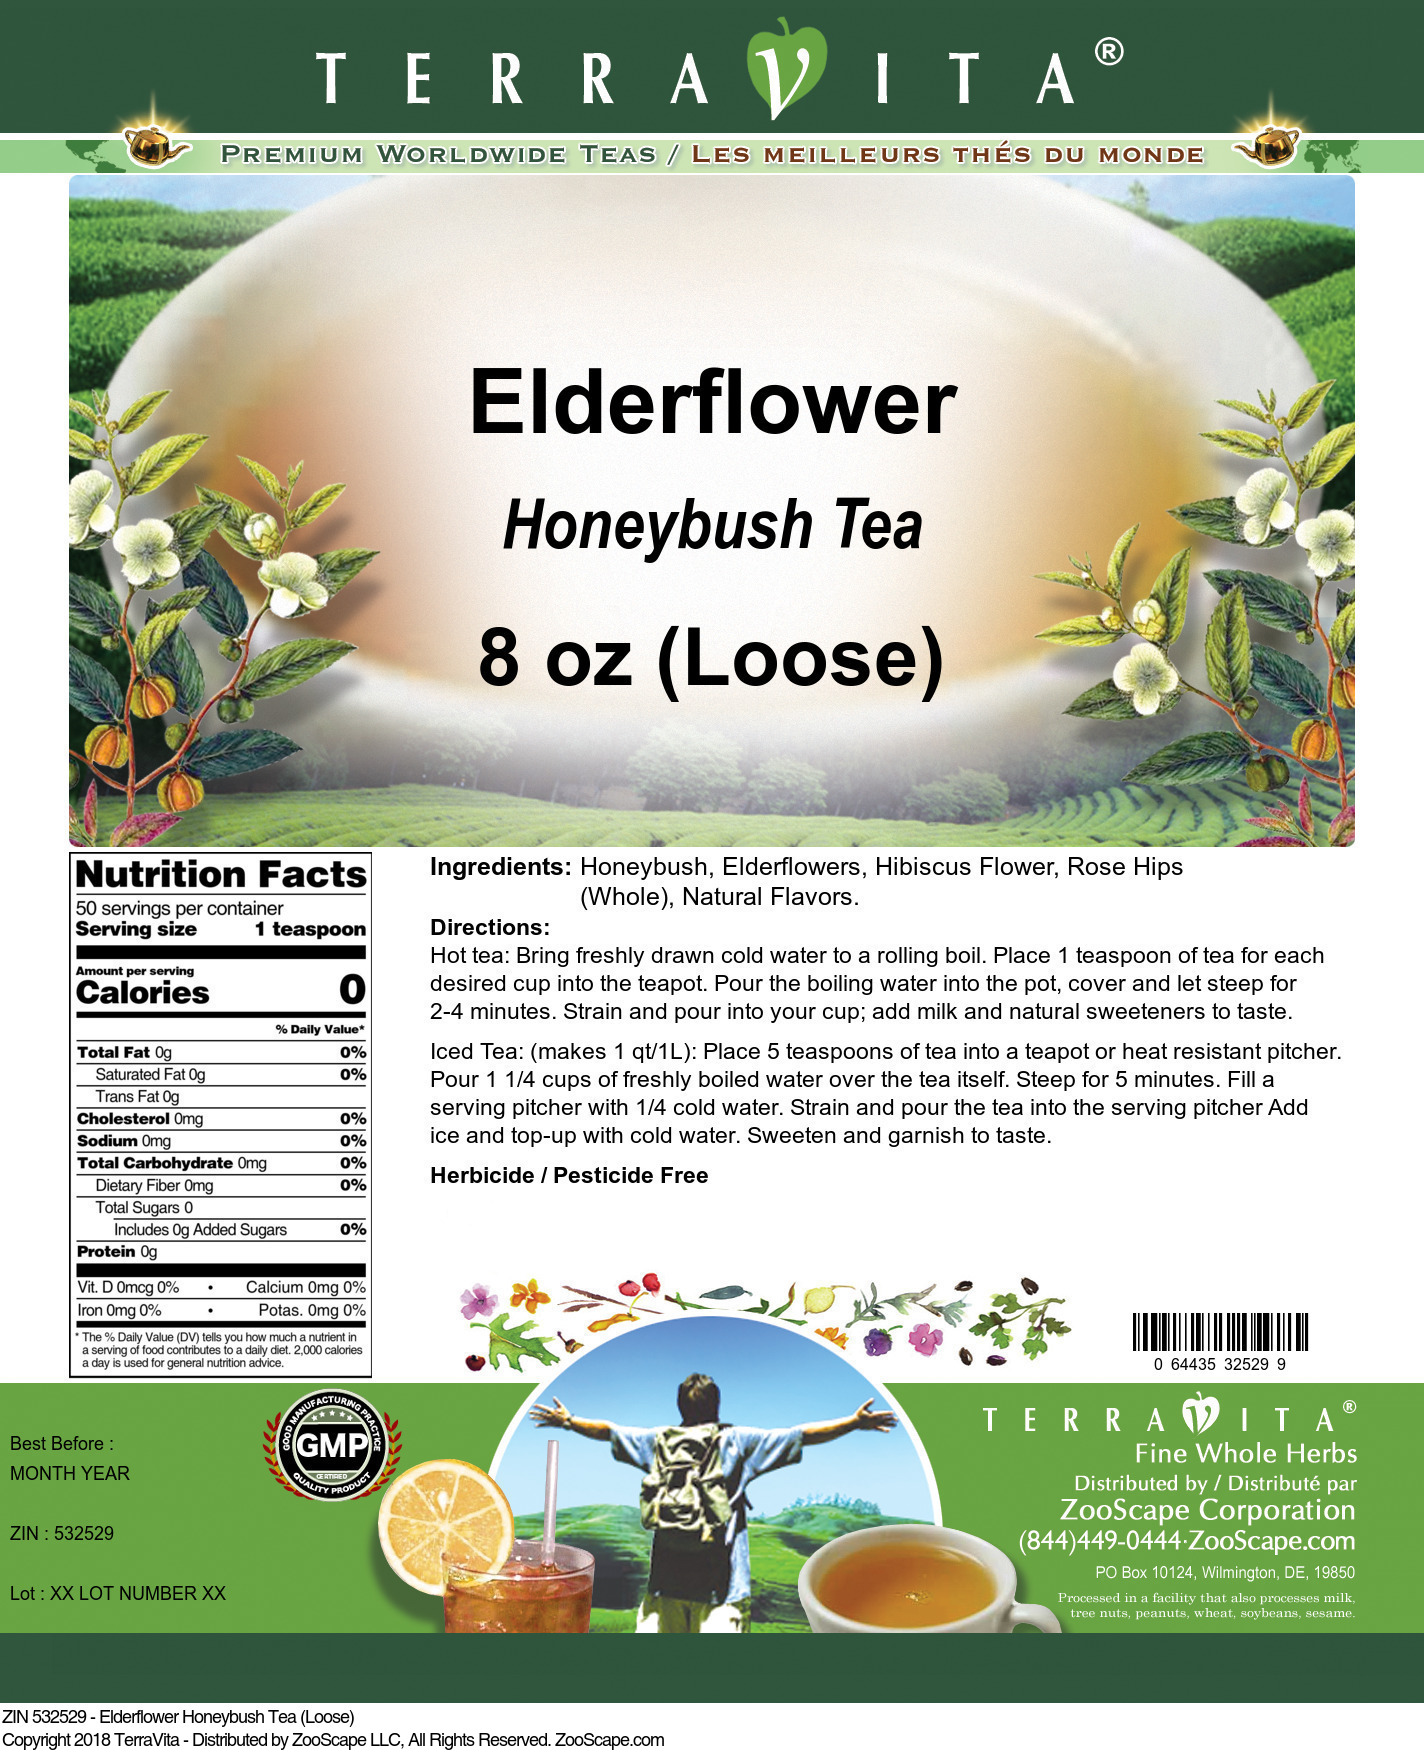 Elderflower Honeybush Tea (Loose) - Label